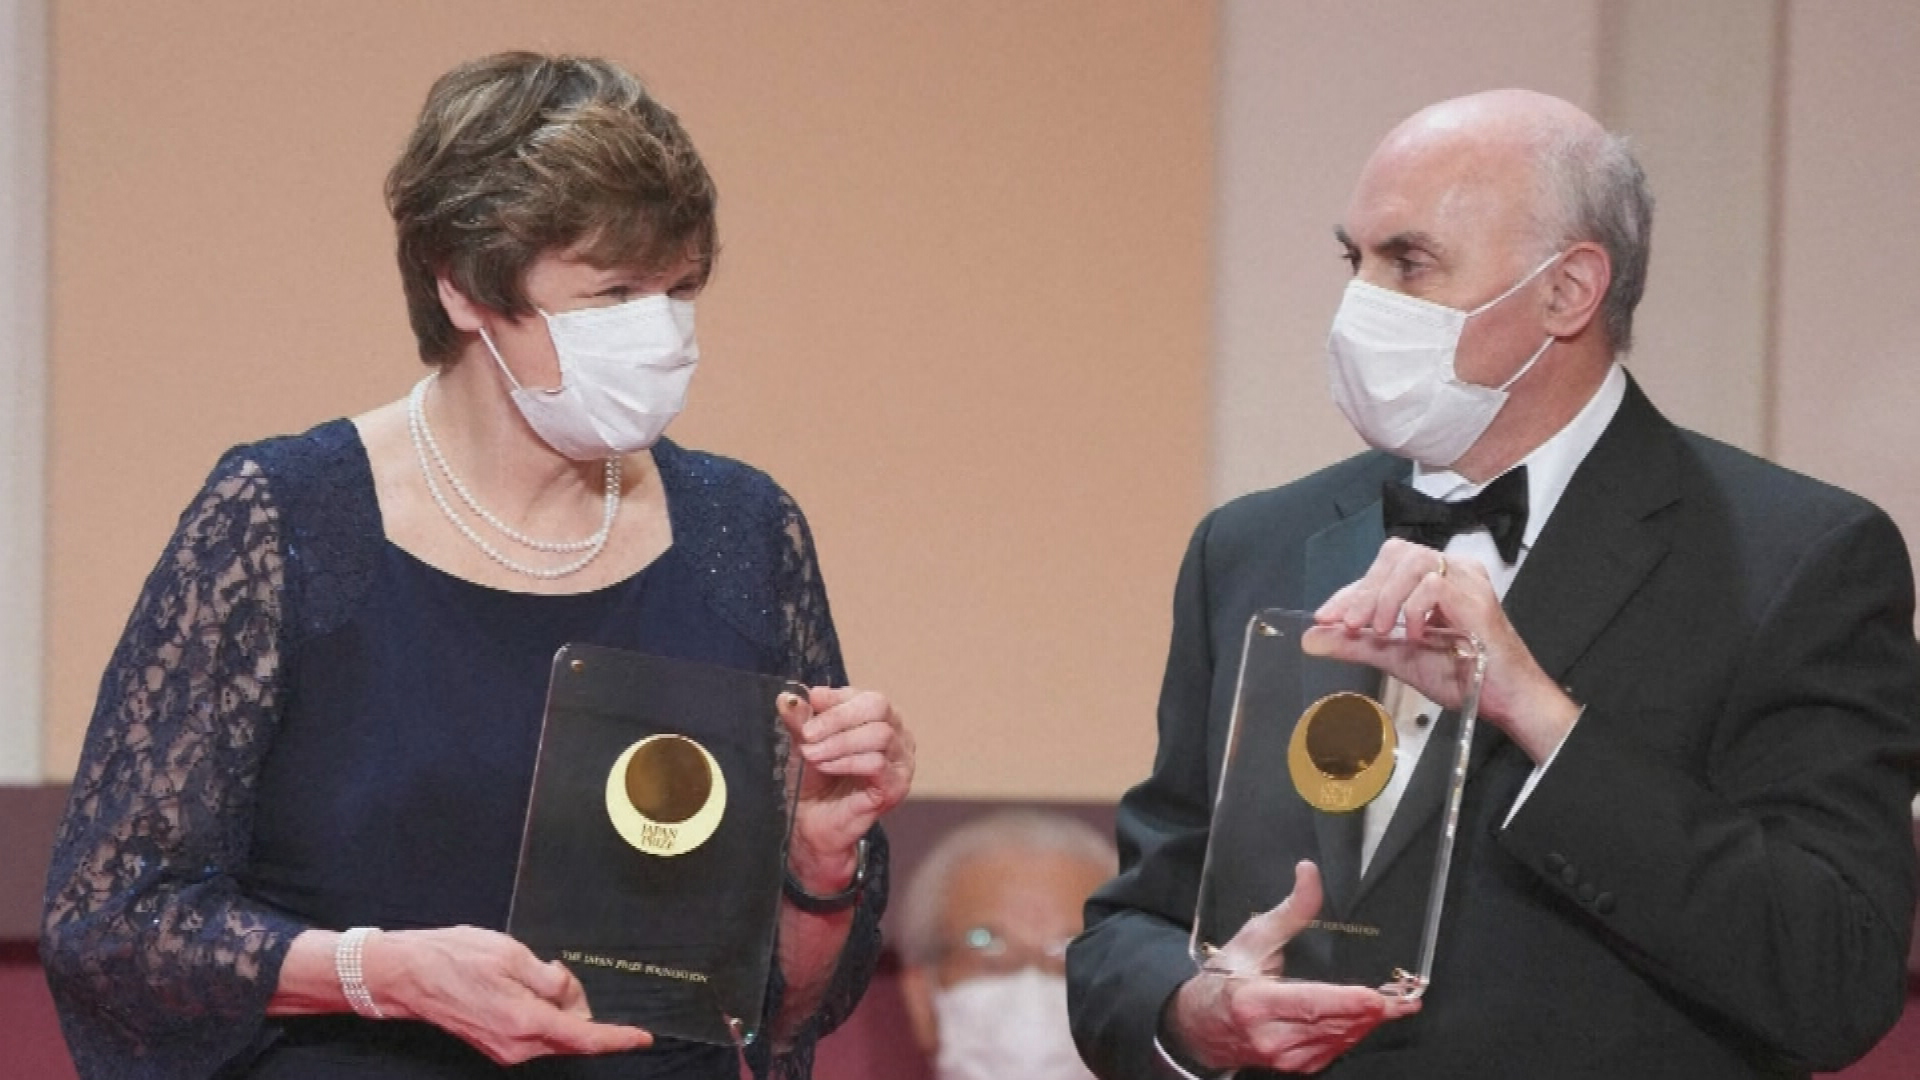 Scientists awarded Nobel Prize for COVID-19 vaccine development